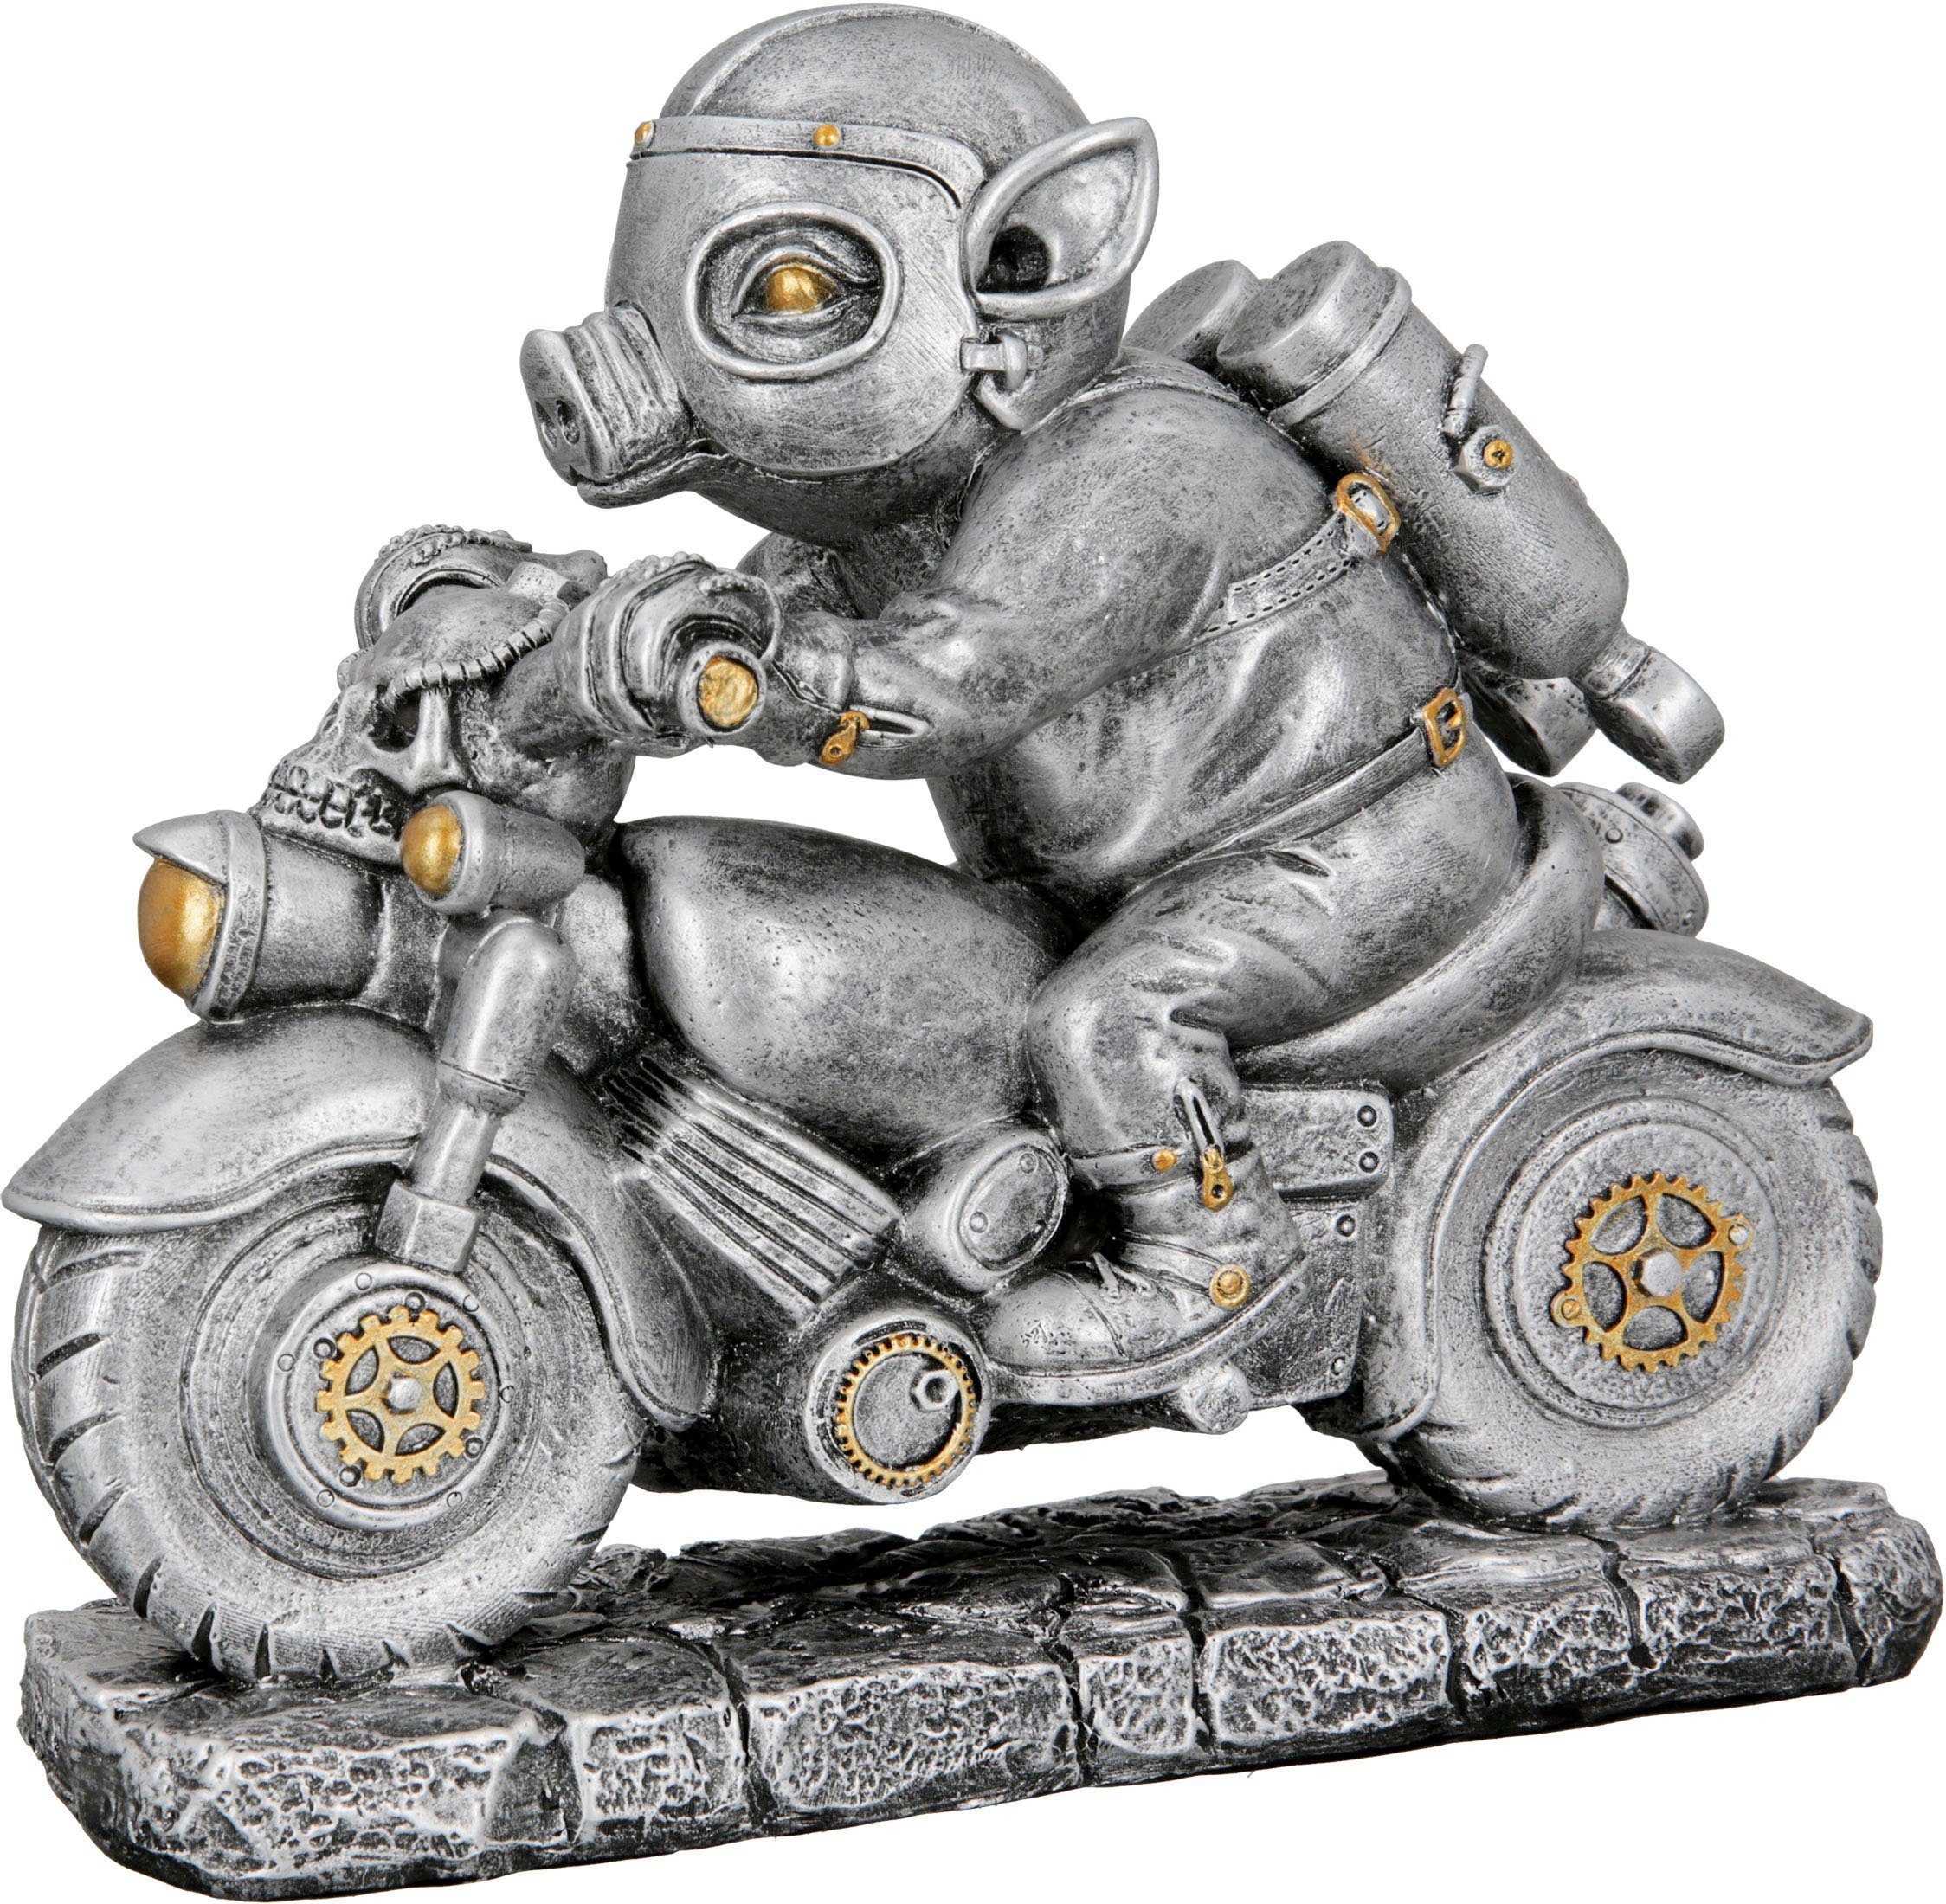 Tierfigur Skulpturen & Gilde Motor-Pig by Casablanca Figuren, Kategorie: Steampunk Skulptur St), (1 Statuen